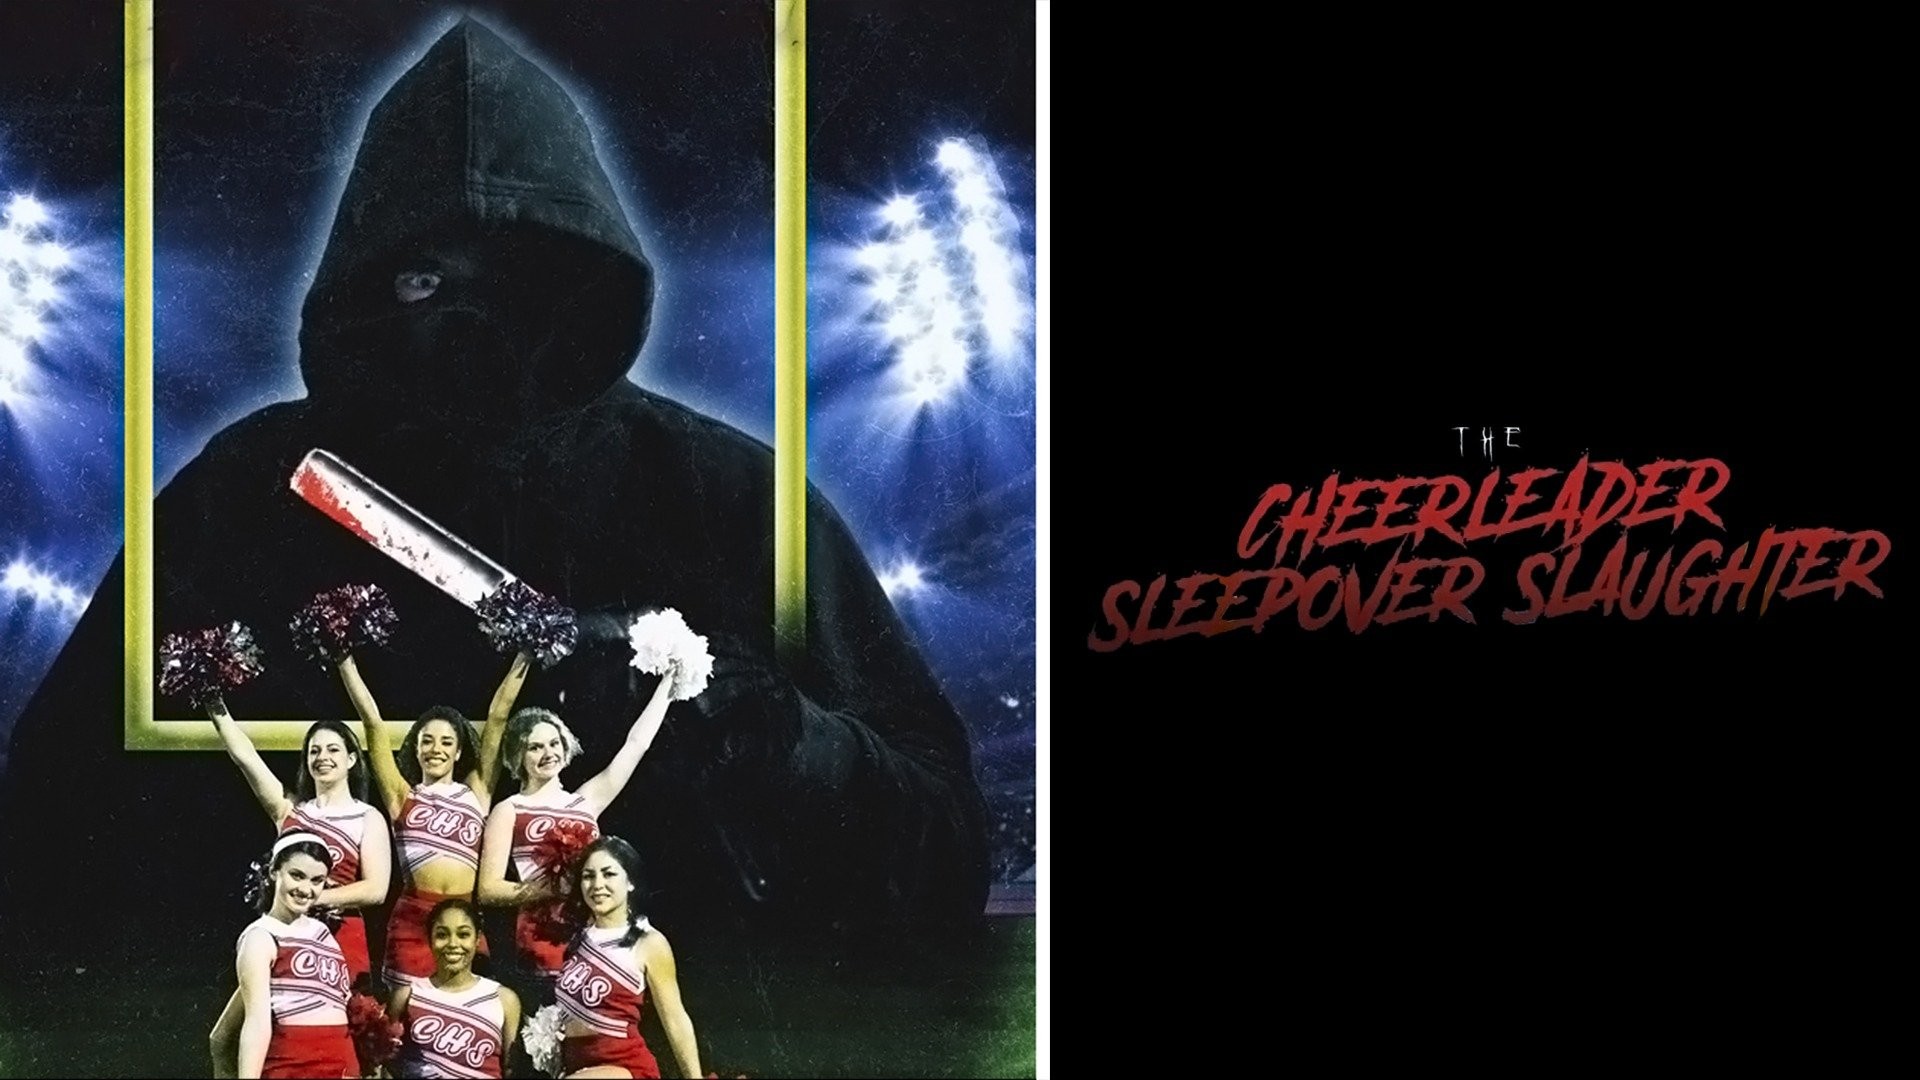 The.cheerleader.sleepover.slaughter.2022